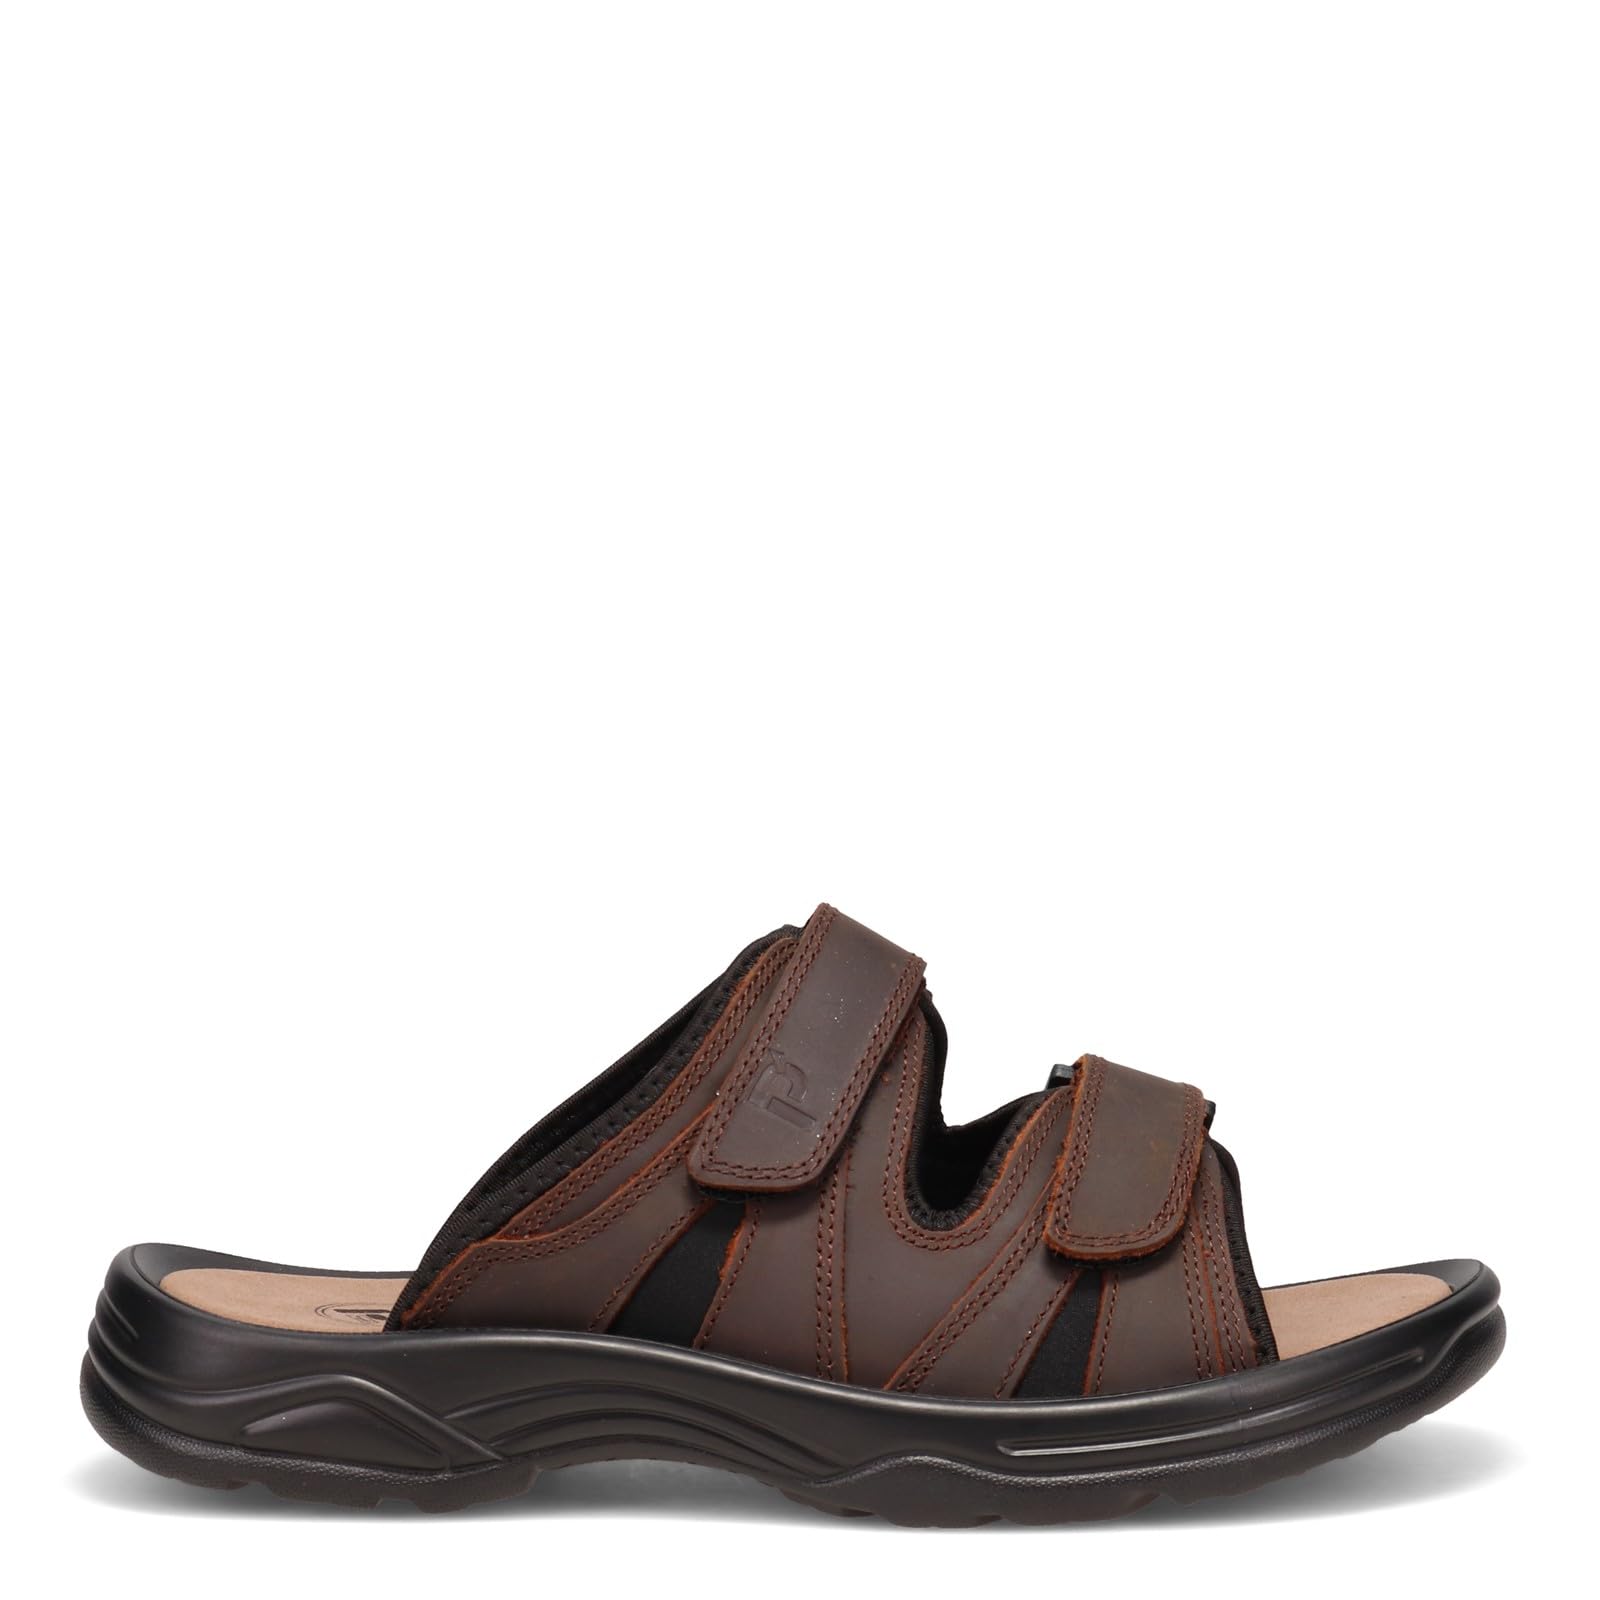 Propét Men's Vero Slide Sandals